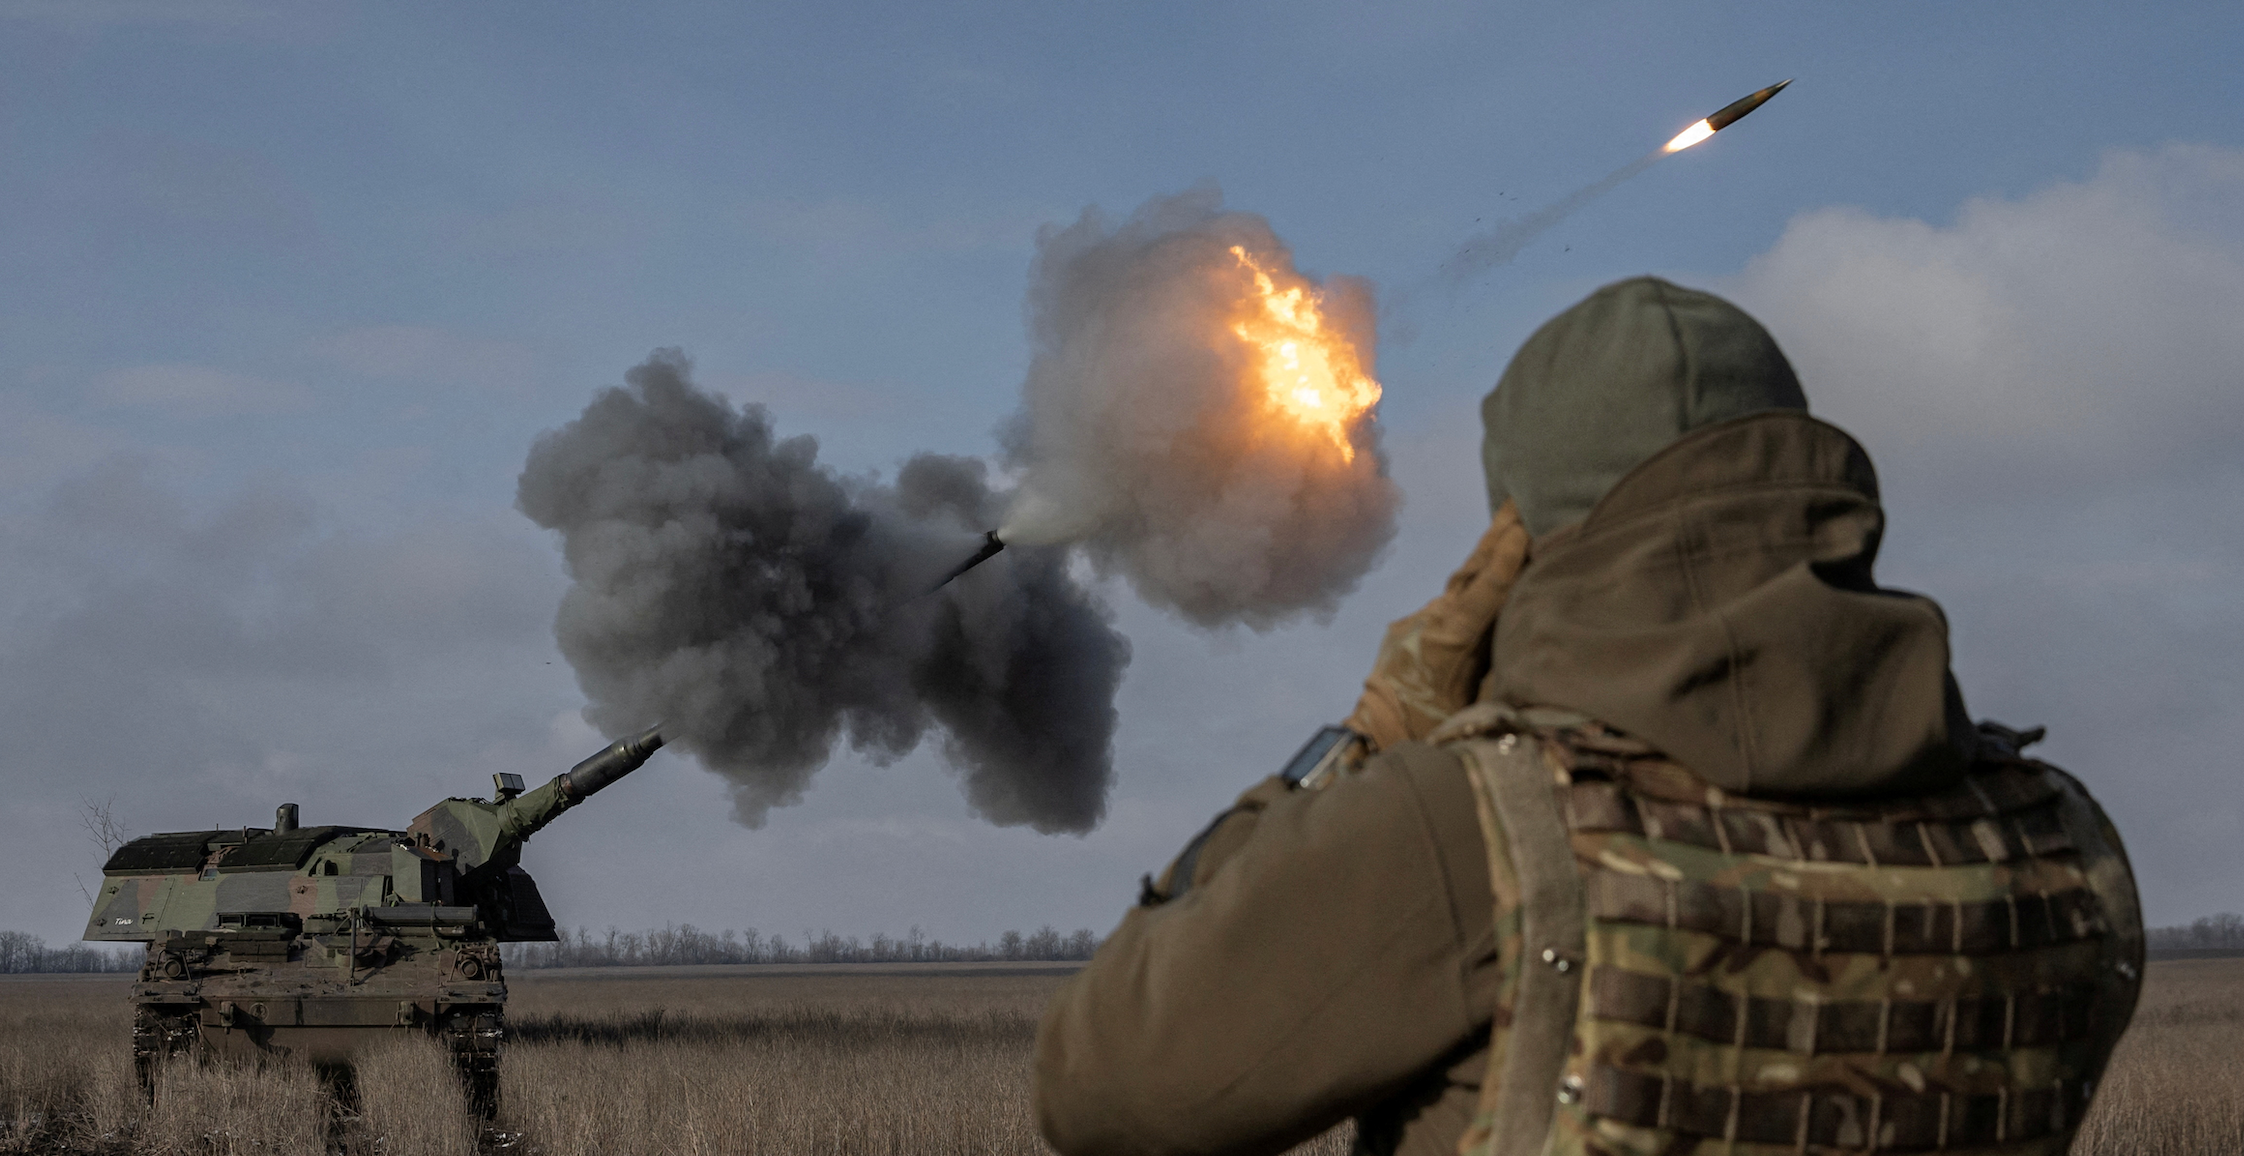 EU to boost ammo production to replenish stock, aid Ukraine